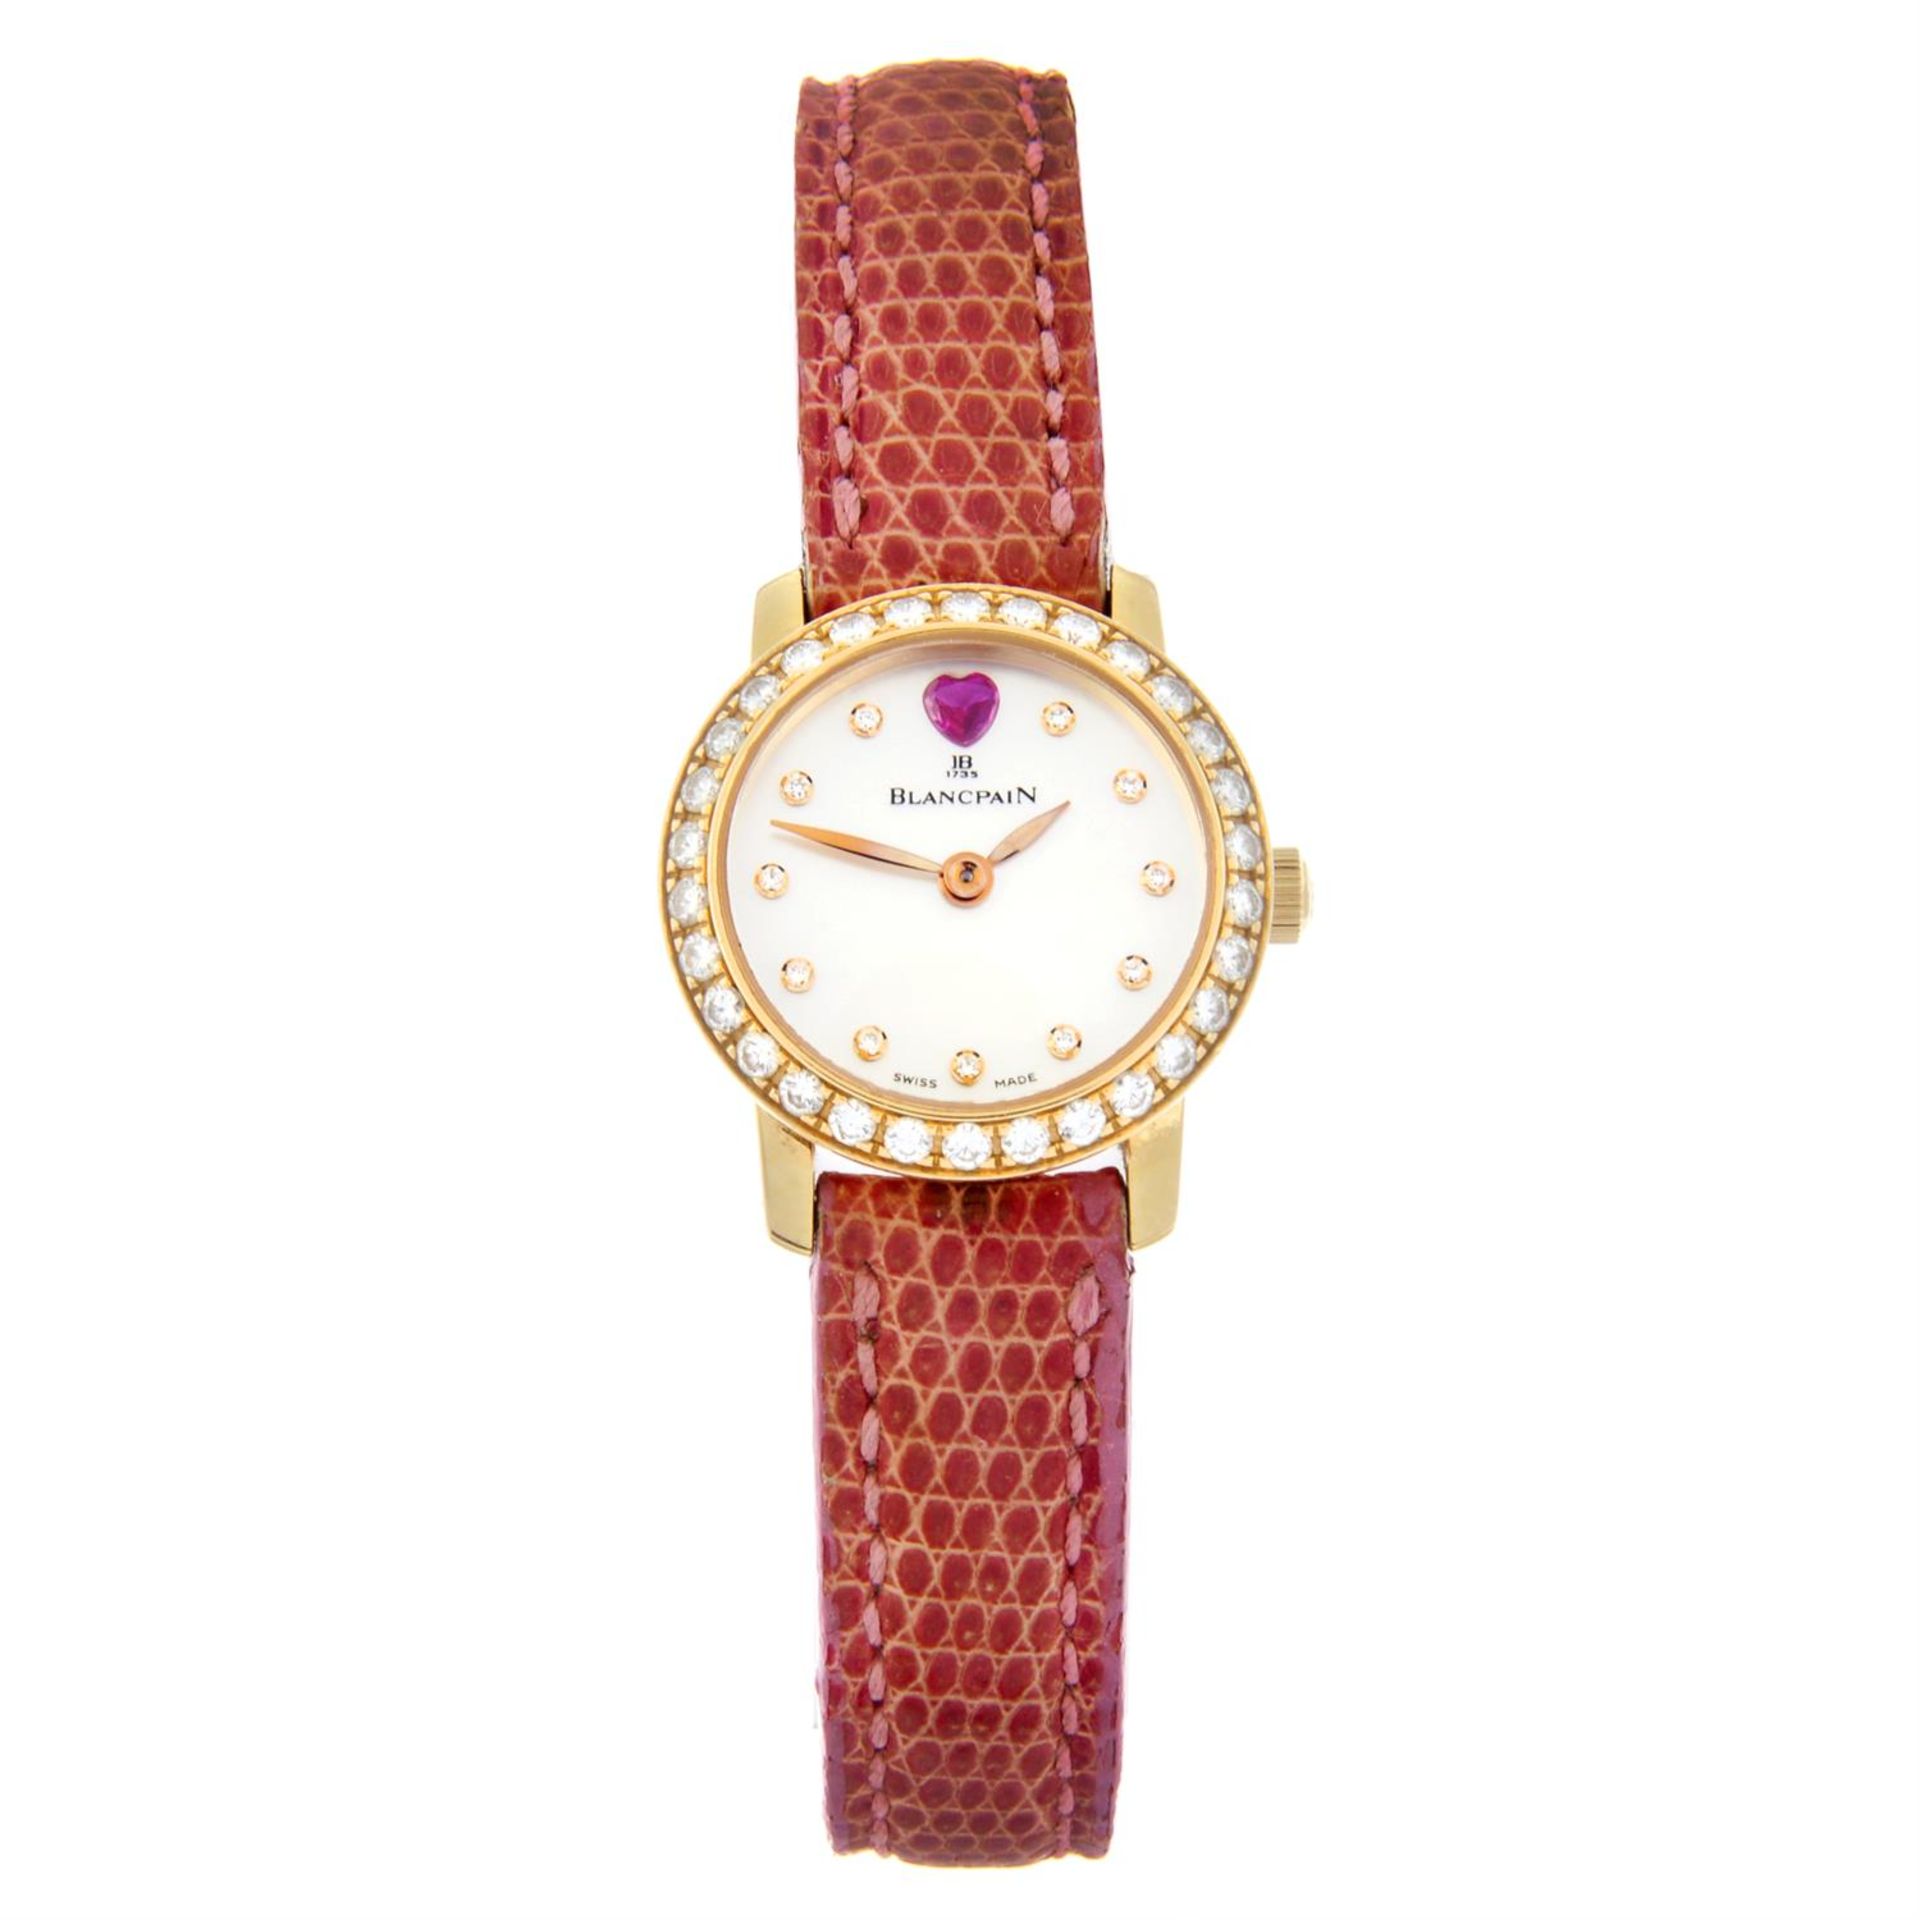 BLANCPAIN - an 18ct yellow gold Ladybird wrist watch, 21.5mm.